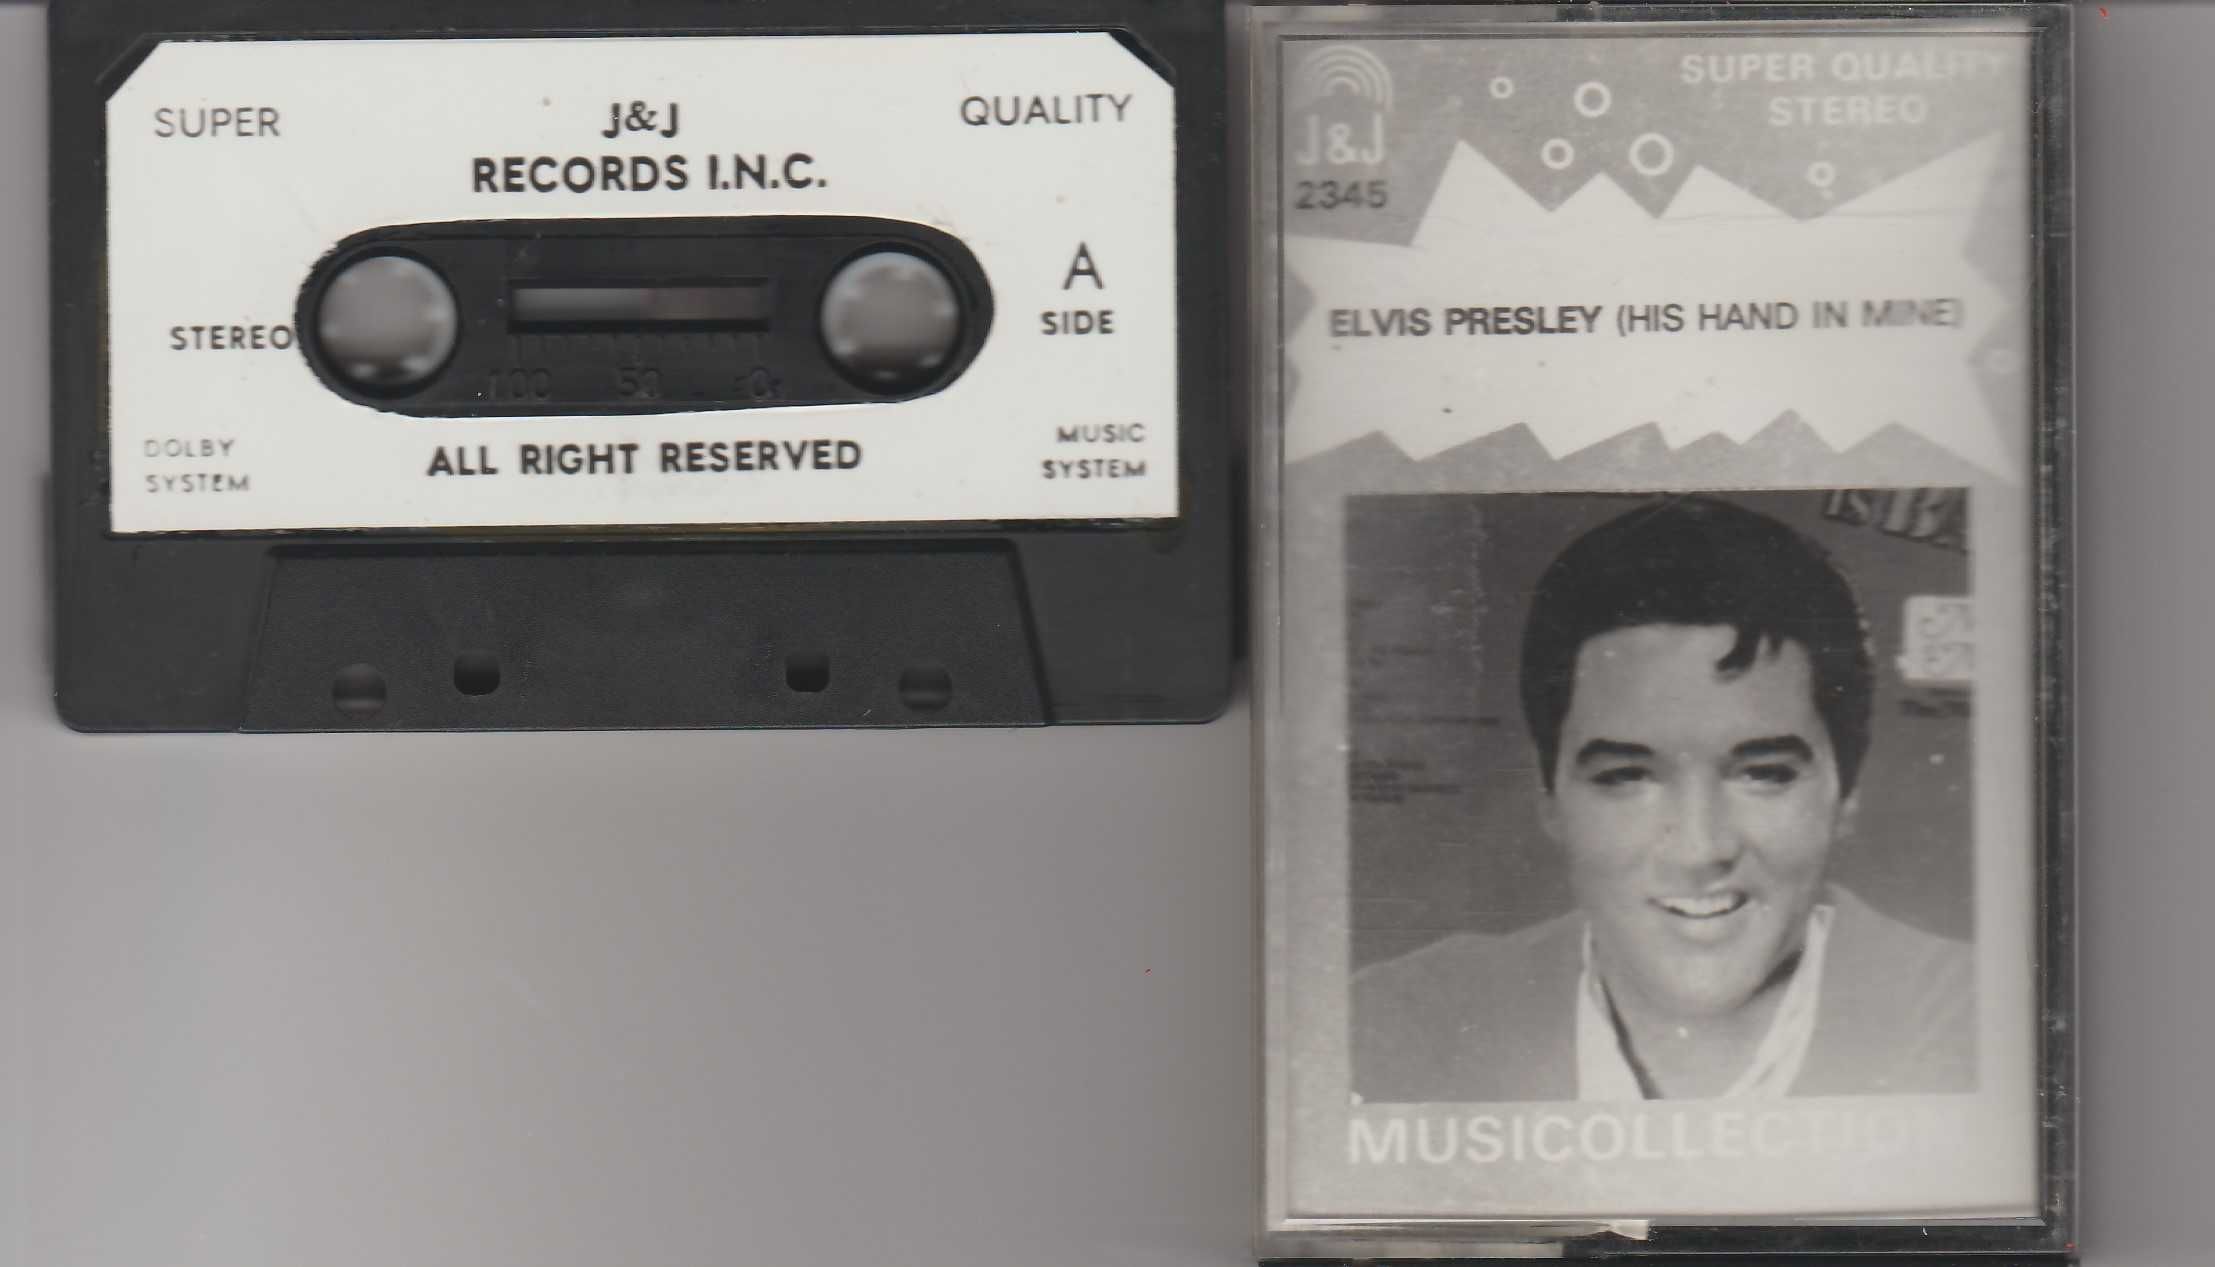 Elvis Presley  MUSICCOLLECTION - kastea magnetofonowa (201)